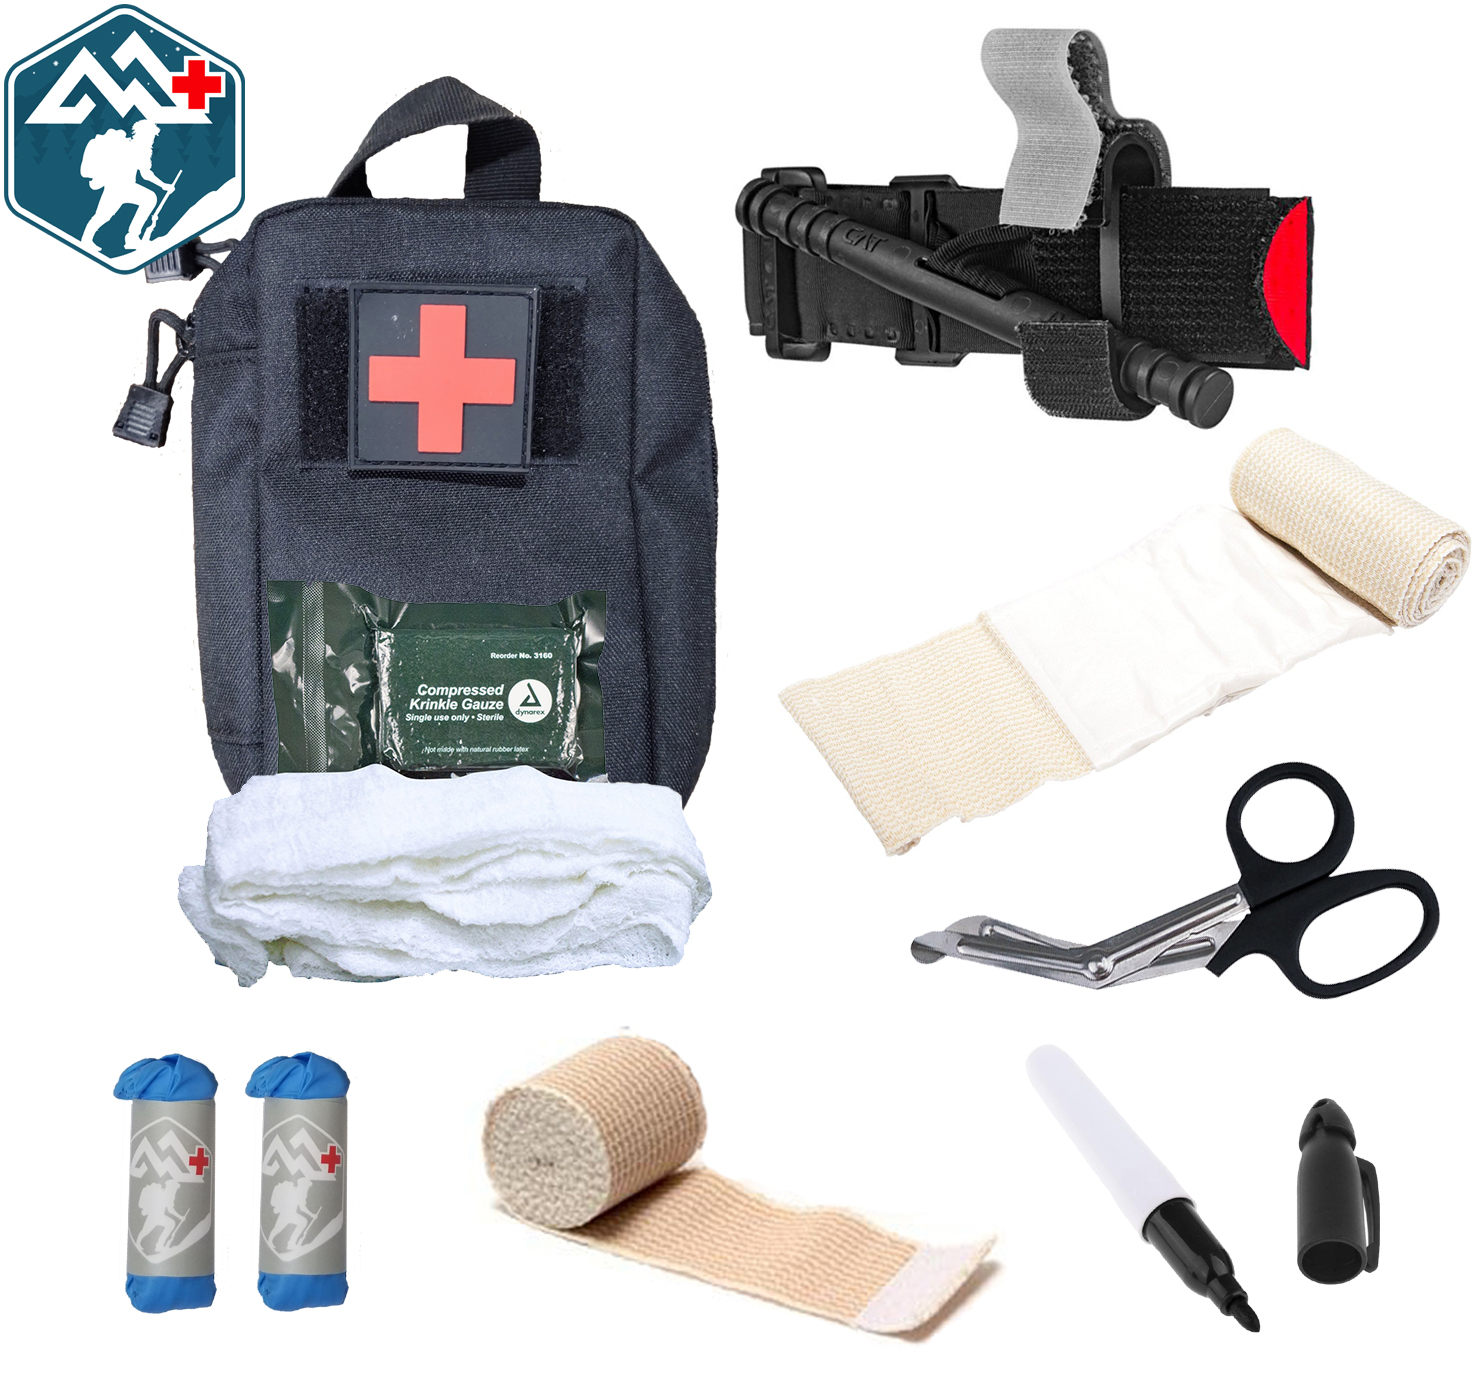 Trauma Kit, Trauma Medical Kit